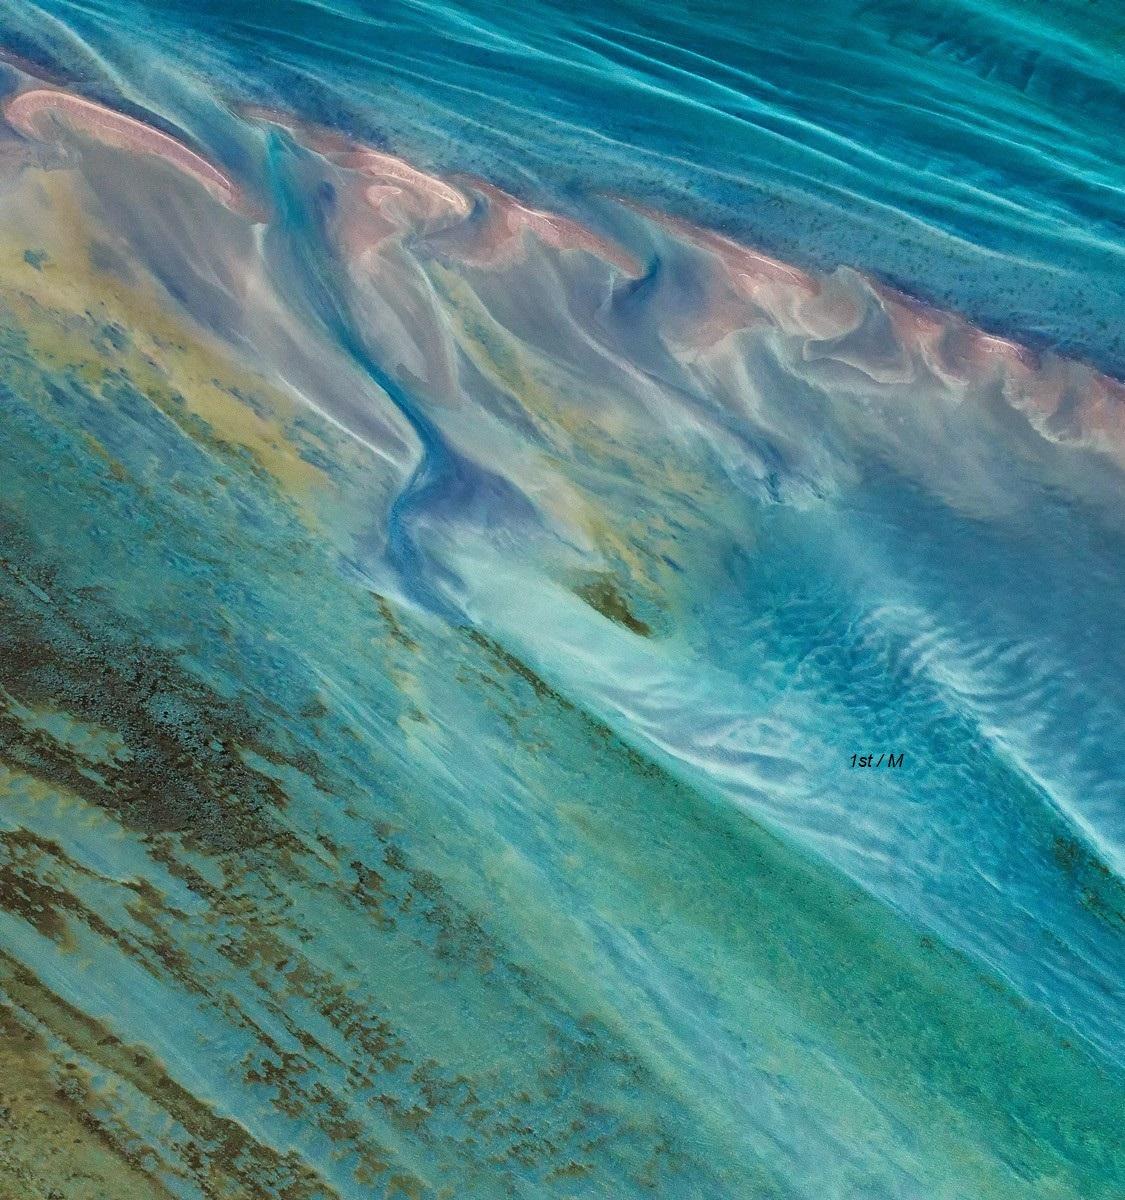 Abstract Photograph MAE Curates - 40x40in. Photographie aérienne de la terre, de la terre, de la mer -  Tirage non encadré Sea F11